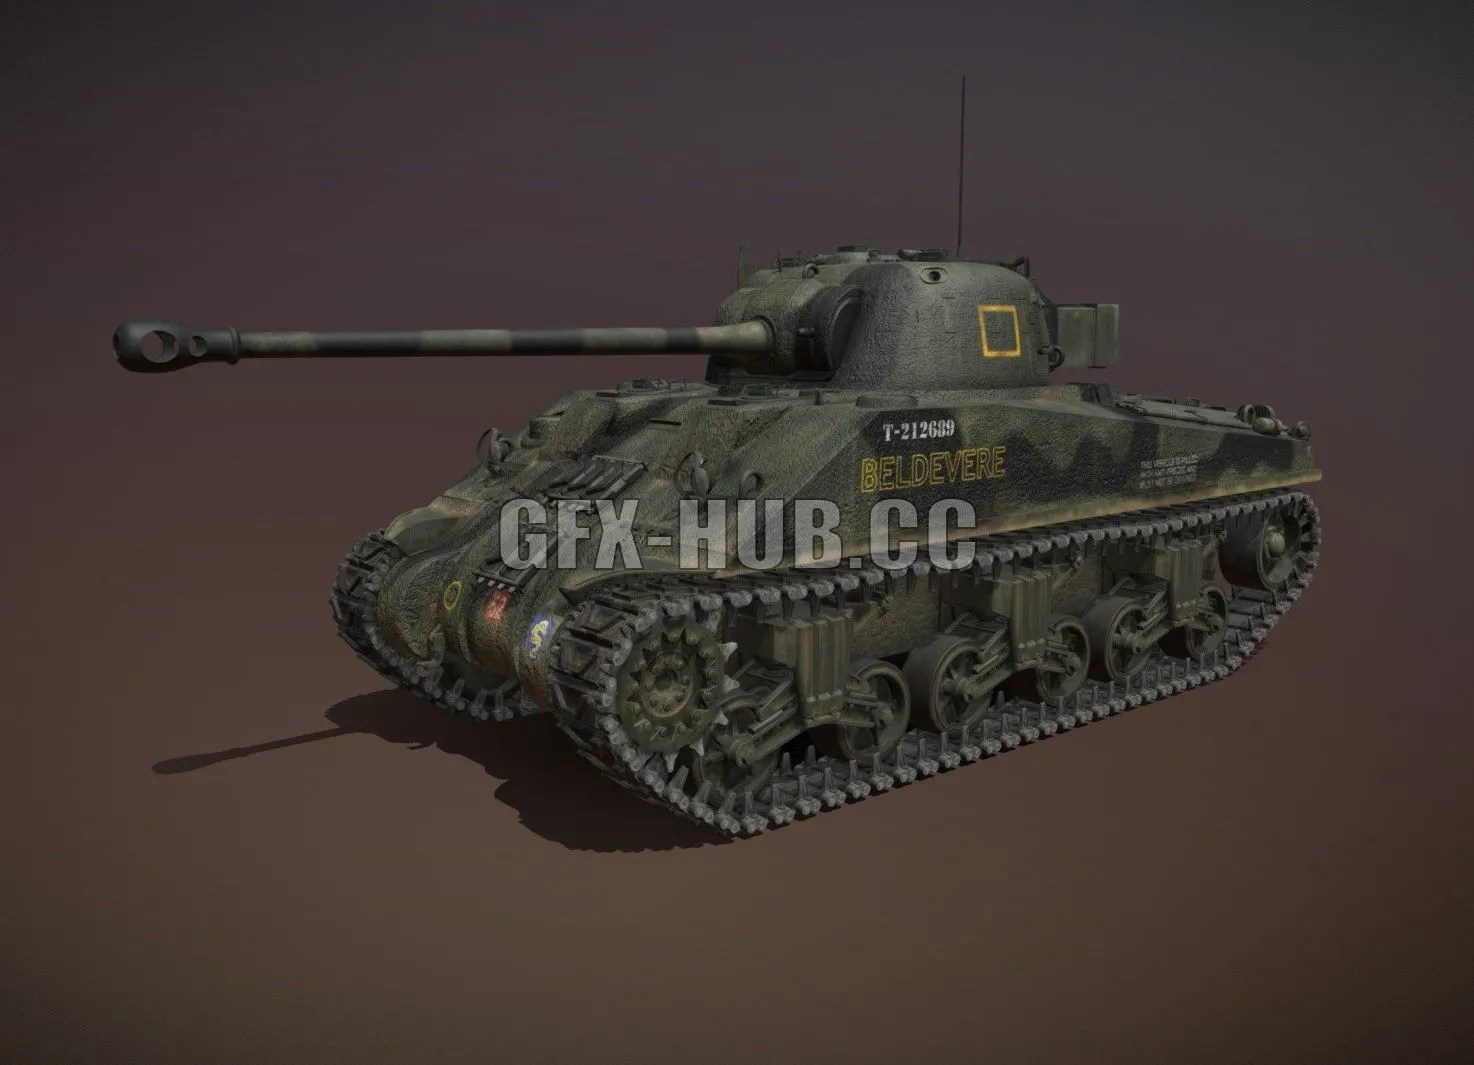 PBR Game 3D Model – M4 Sherman MK VC Firefly – Beldevere